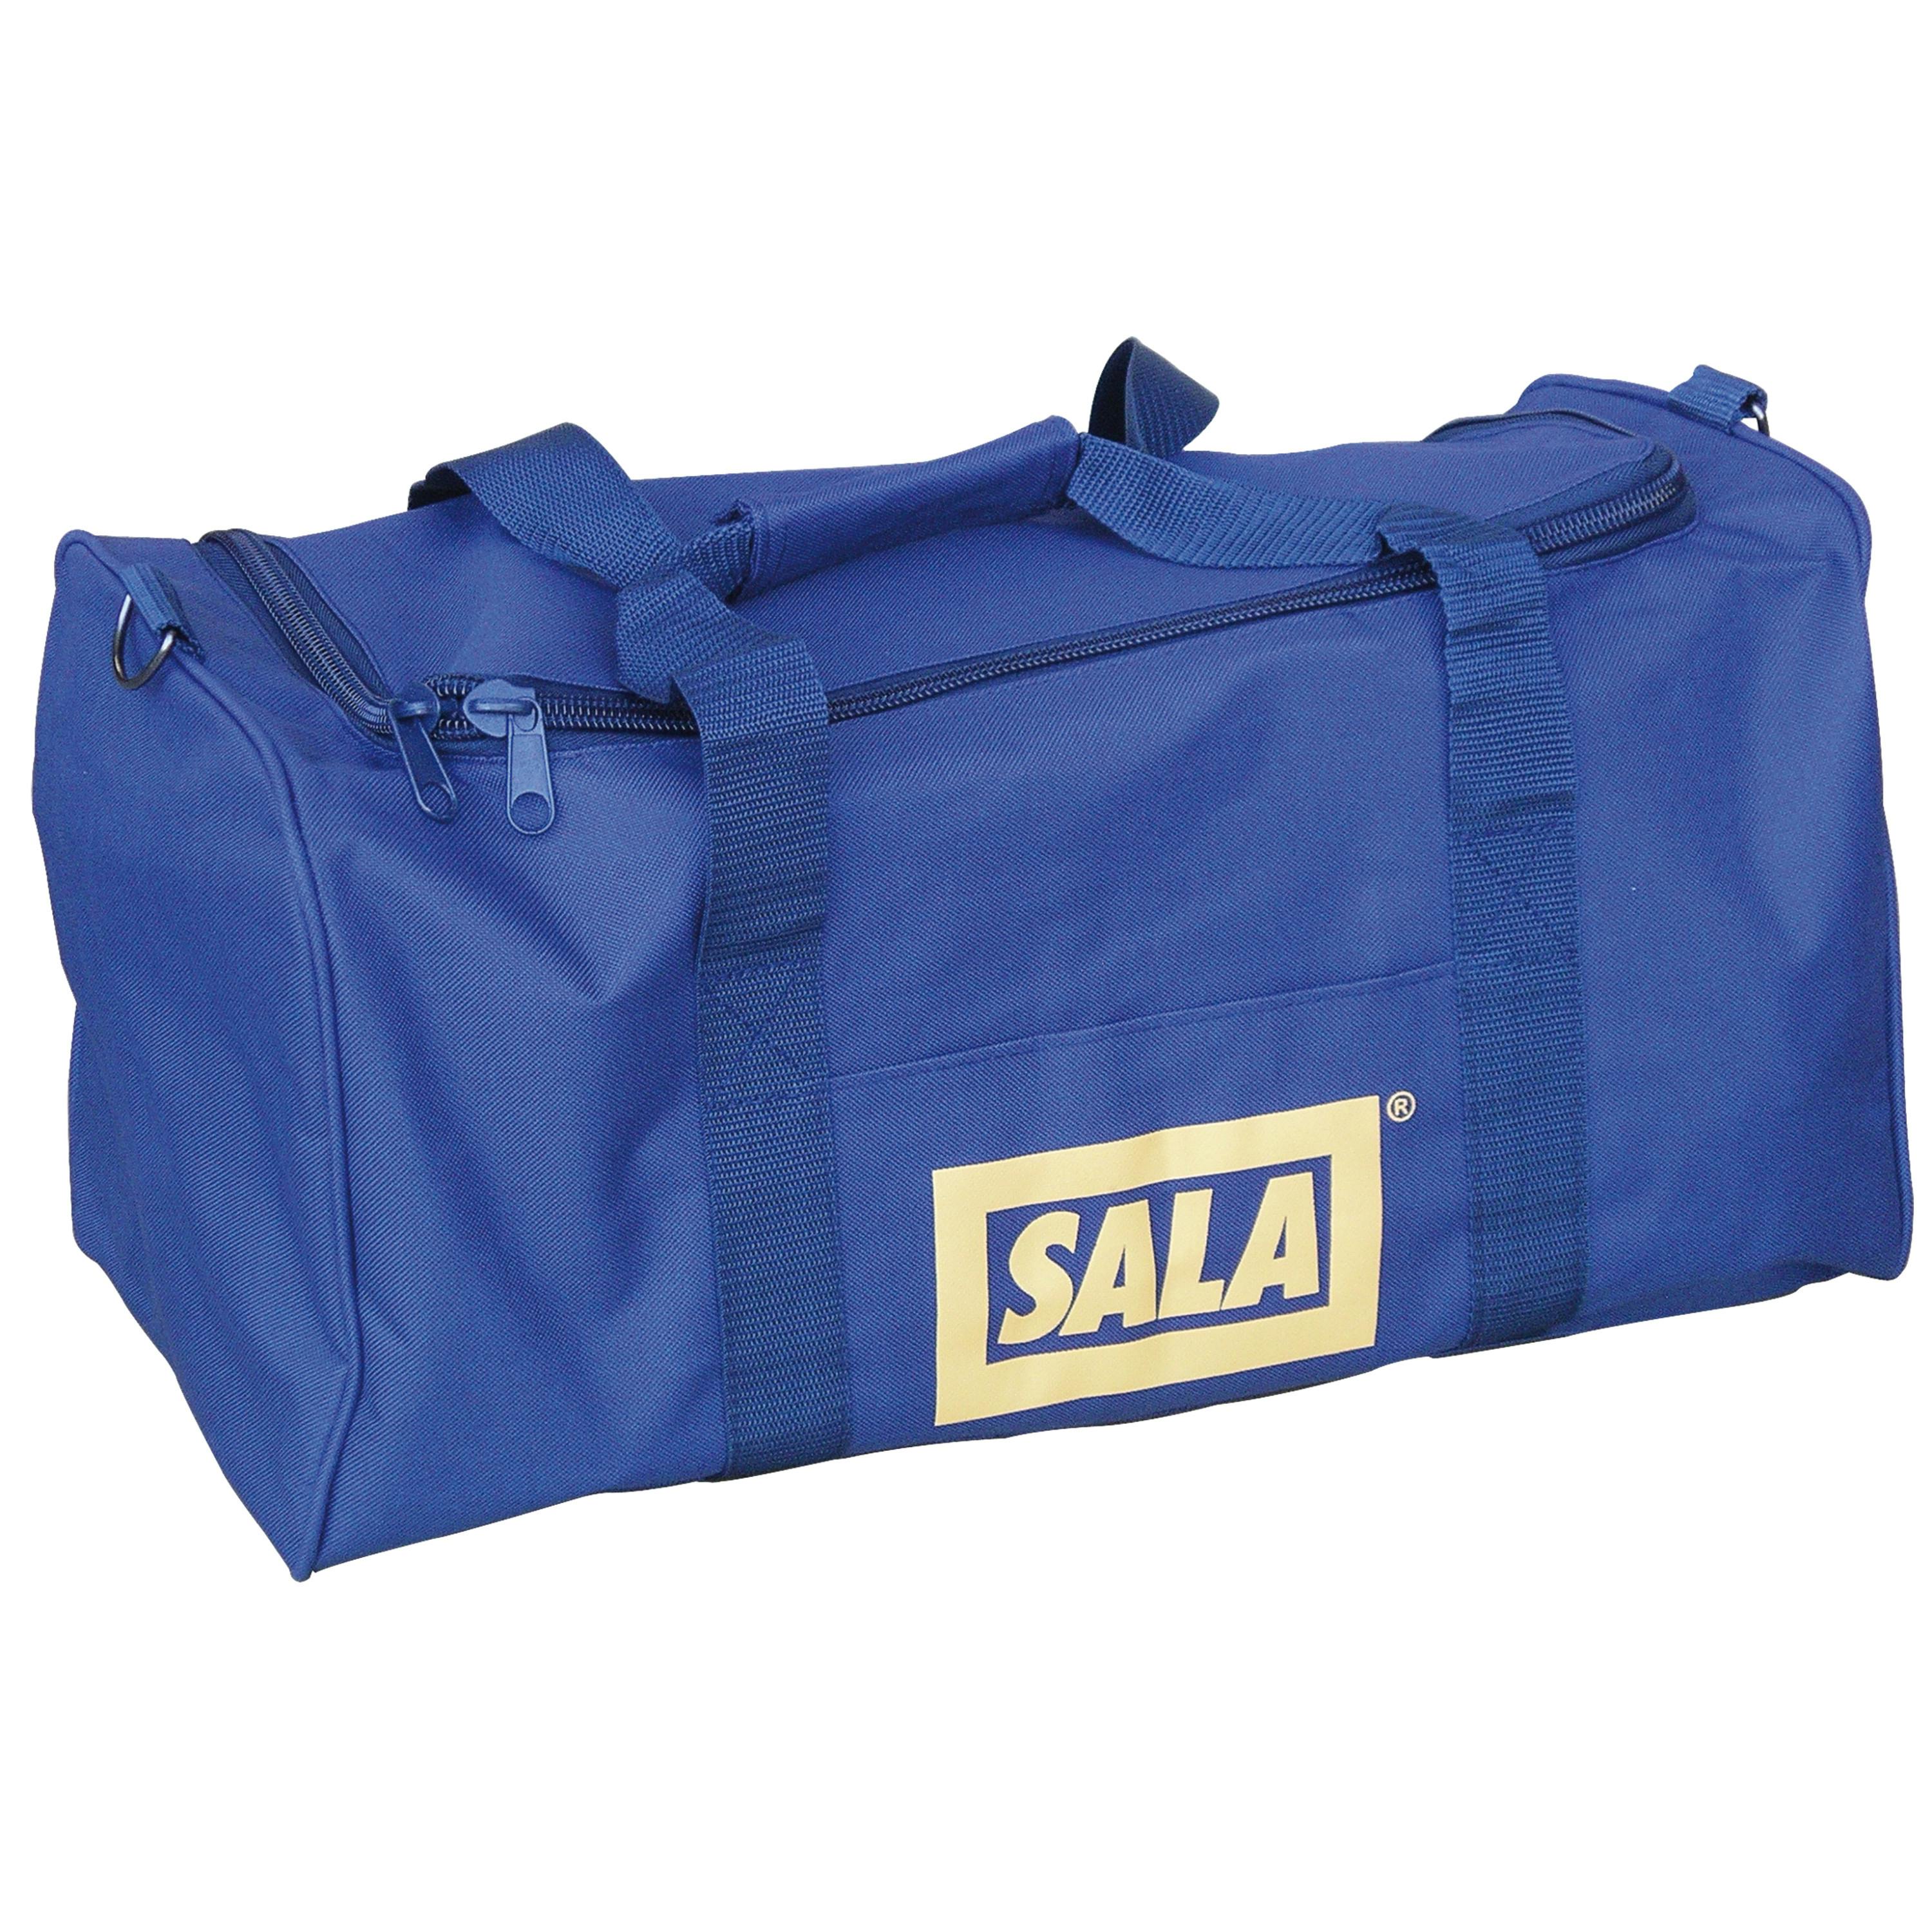 3M™ DBI-SALA® Equipment / Kit Storage Bag - Standard 1900-0000, Blue, Universal, 1 EA/Case